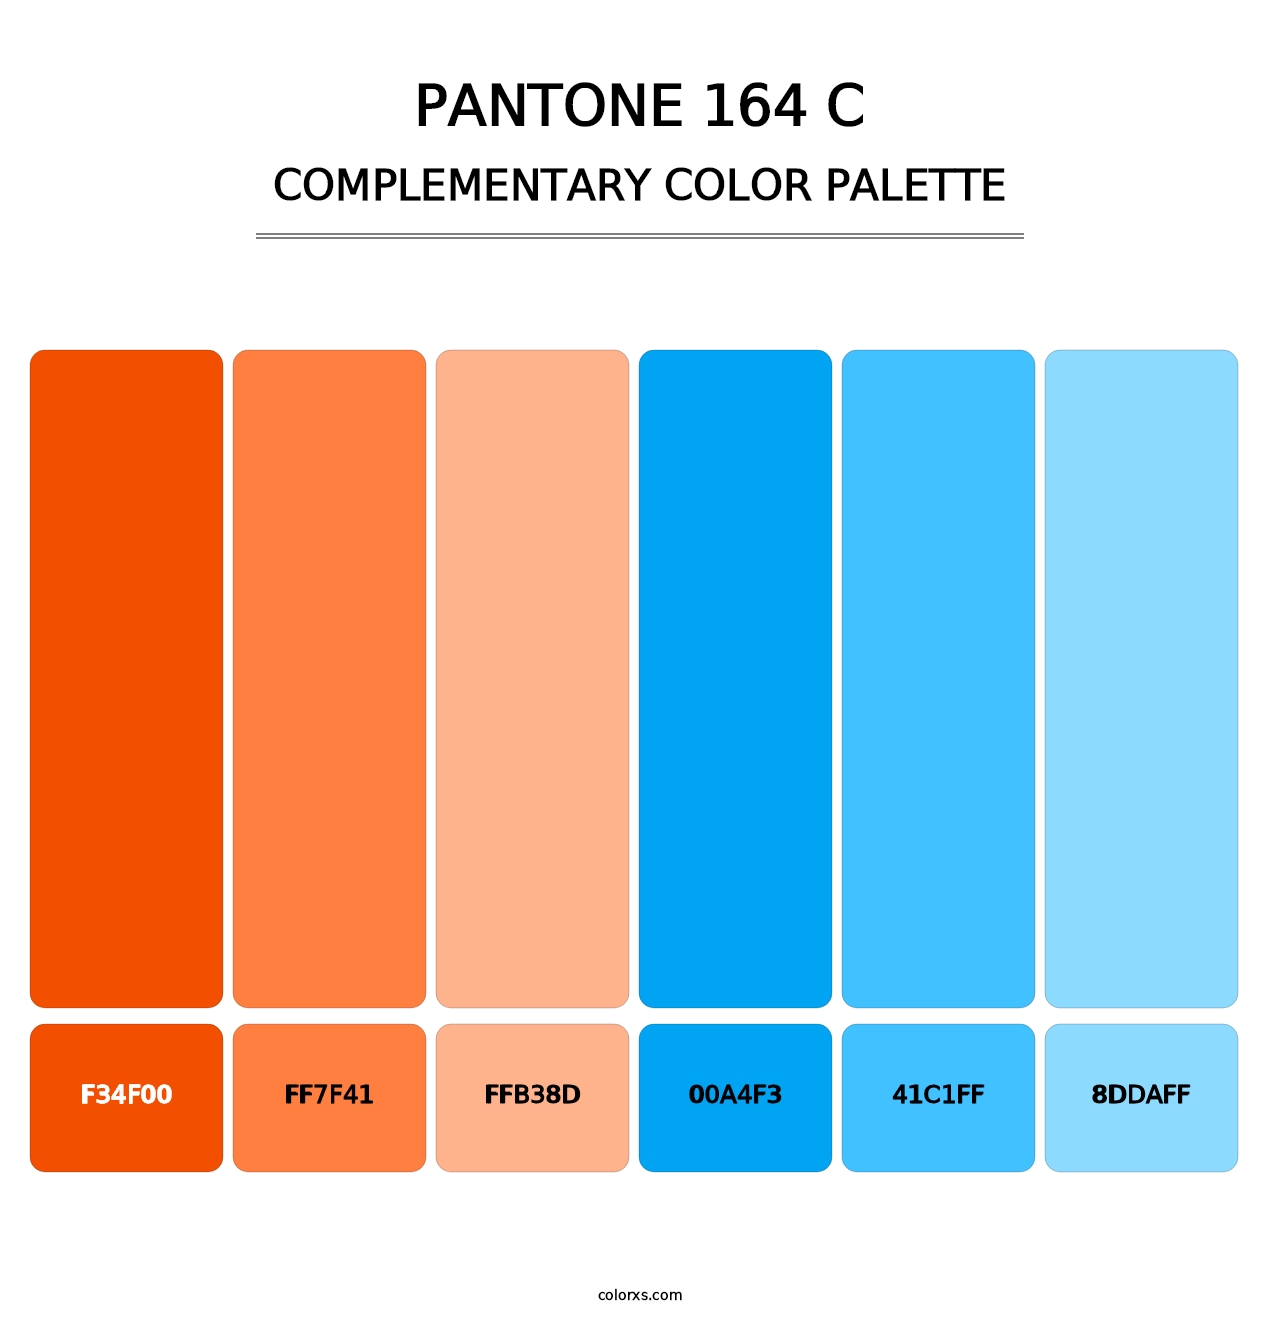 PANTONE 164 C - Complementary Color Palette